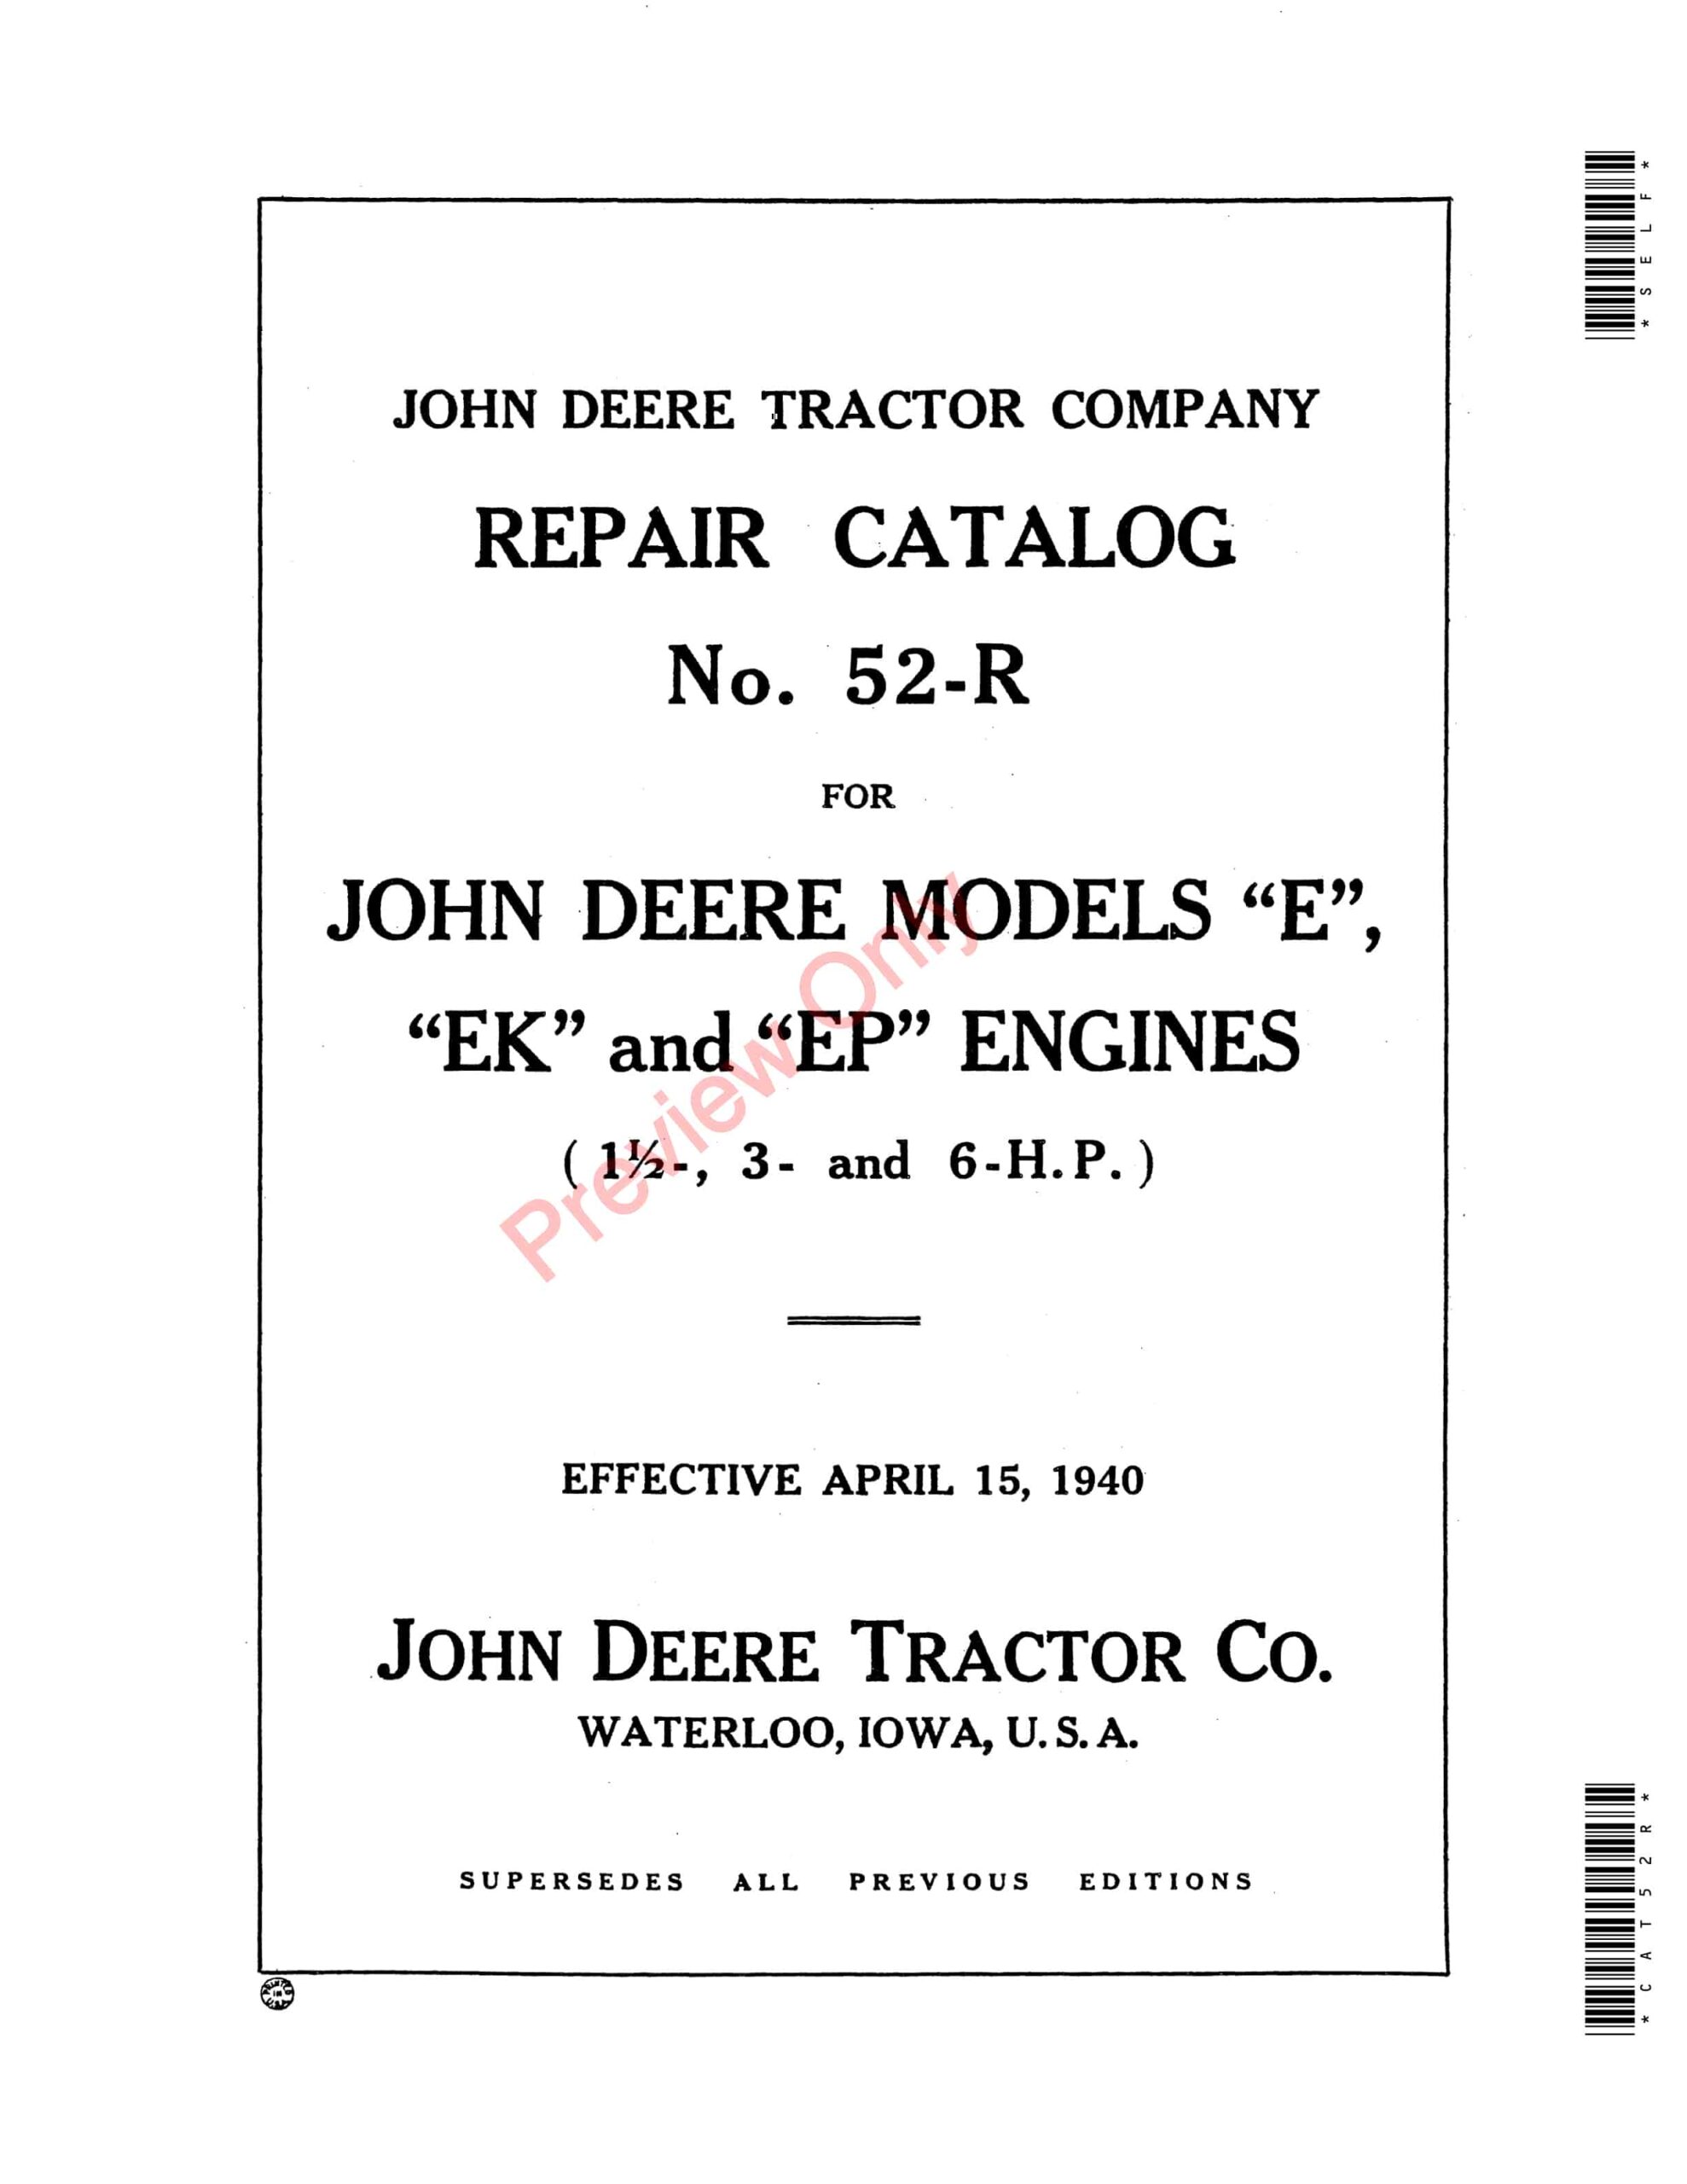 John Deere No. 52-R for JD Models E, EK, EP Engines Parts Catalog Repair Catalog CAT52R 15APR40-1